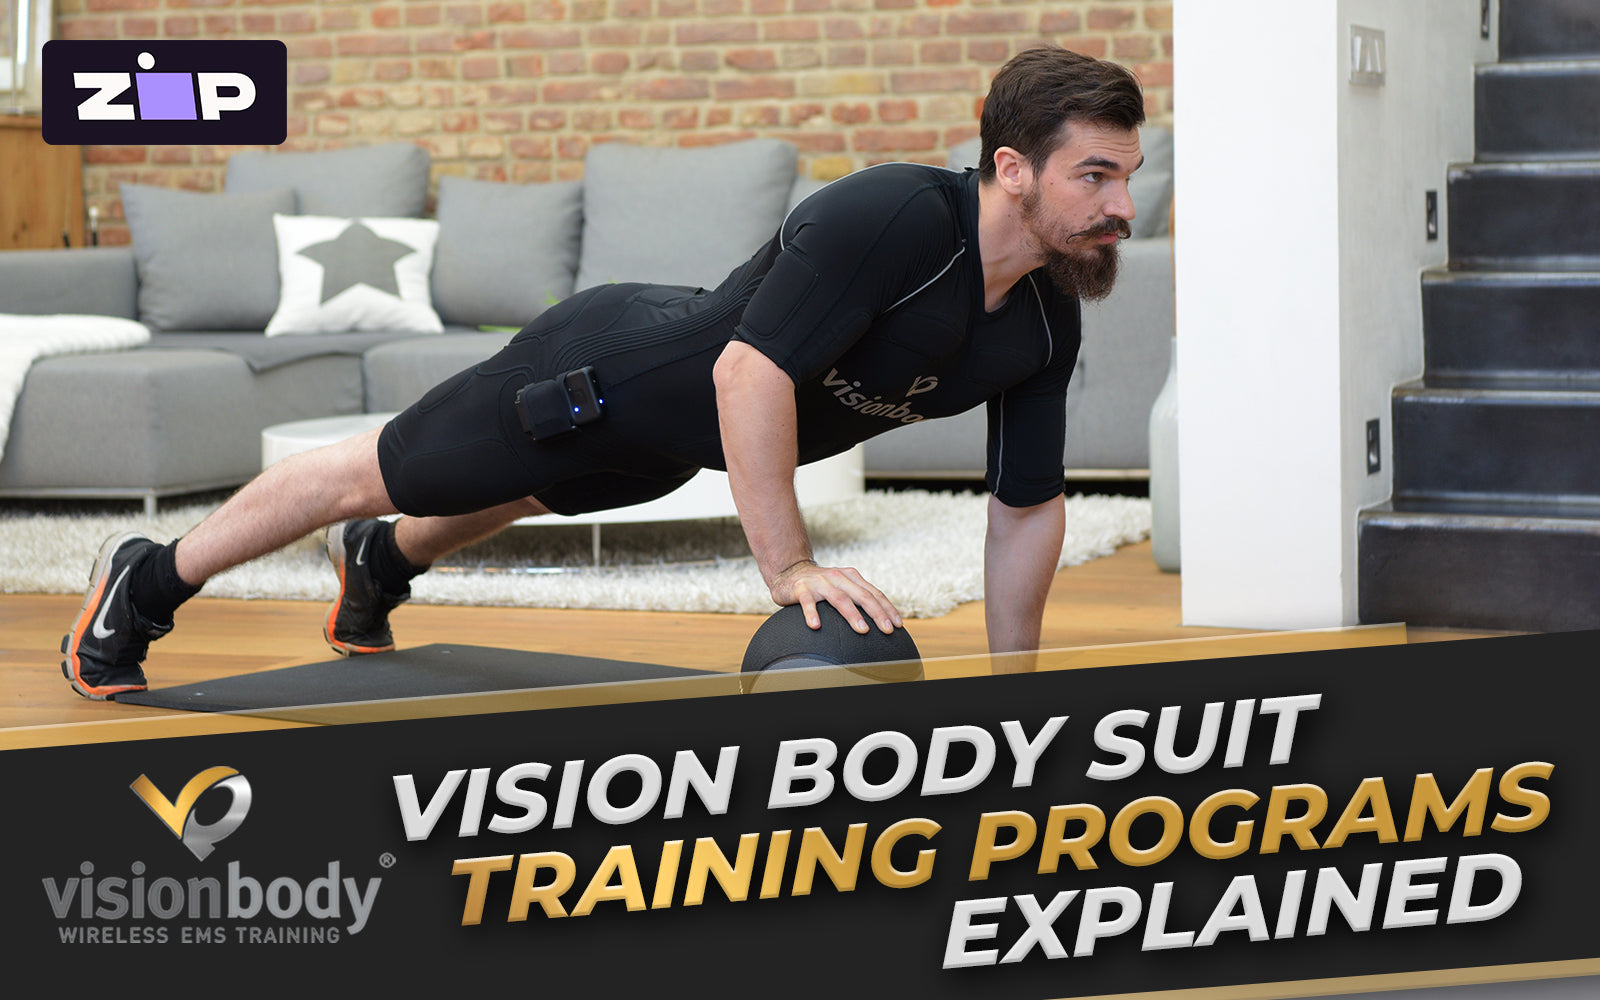 Vision Body Suit training programs explained.